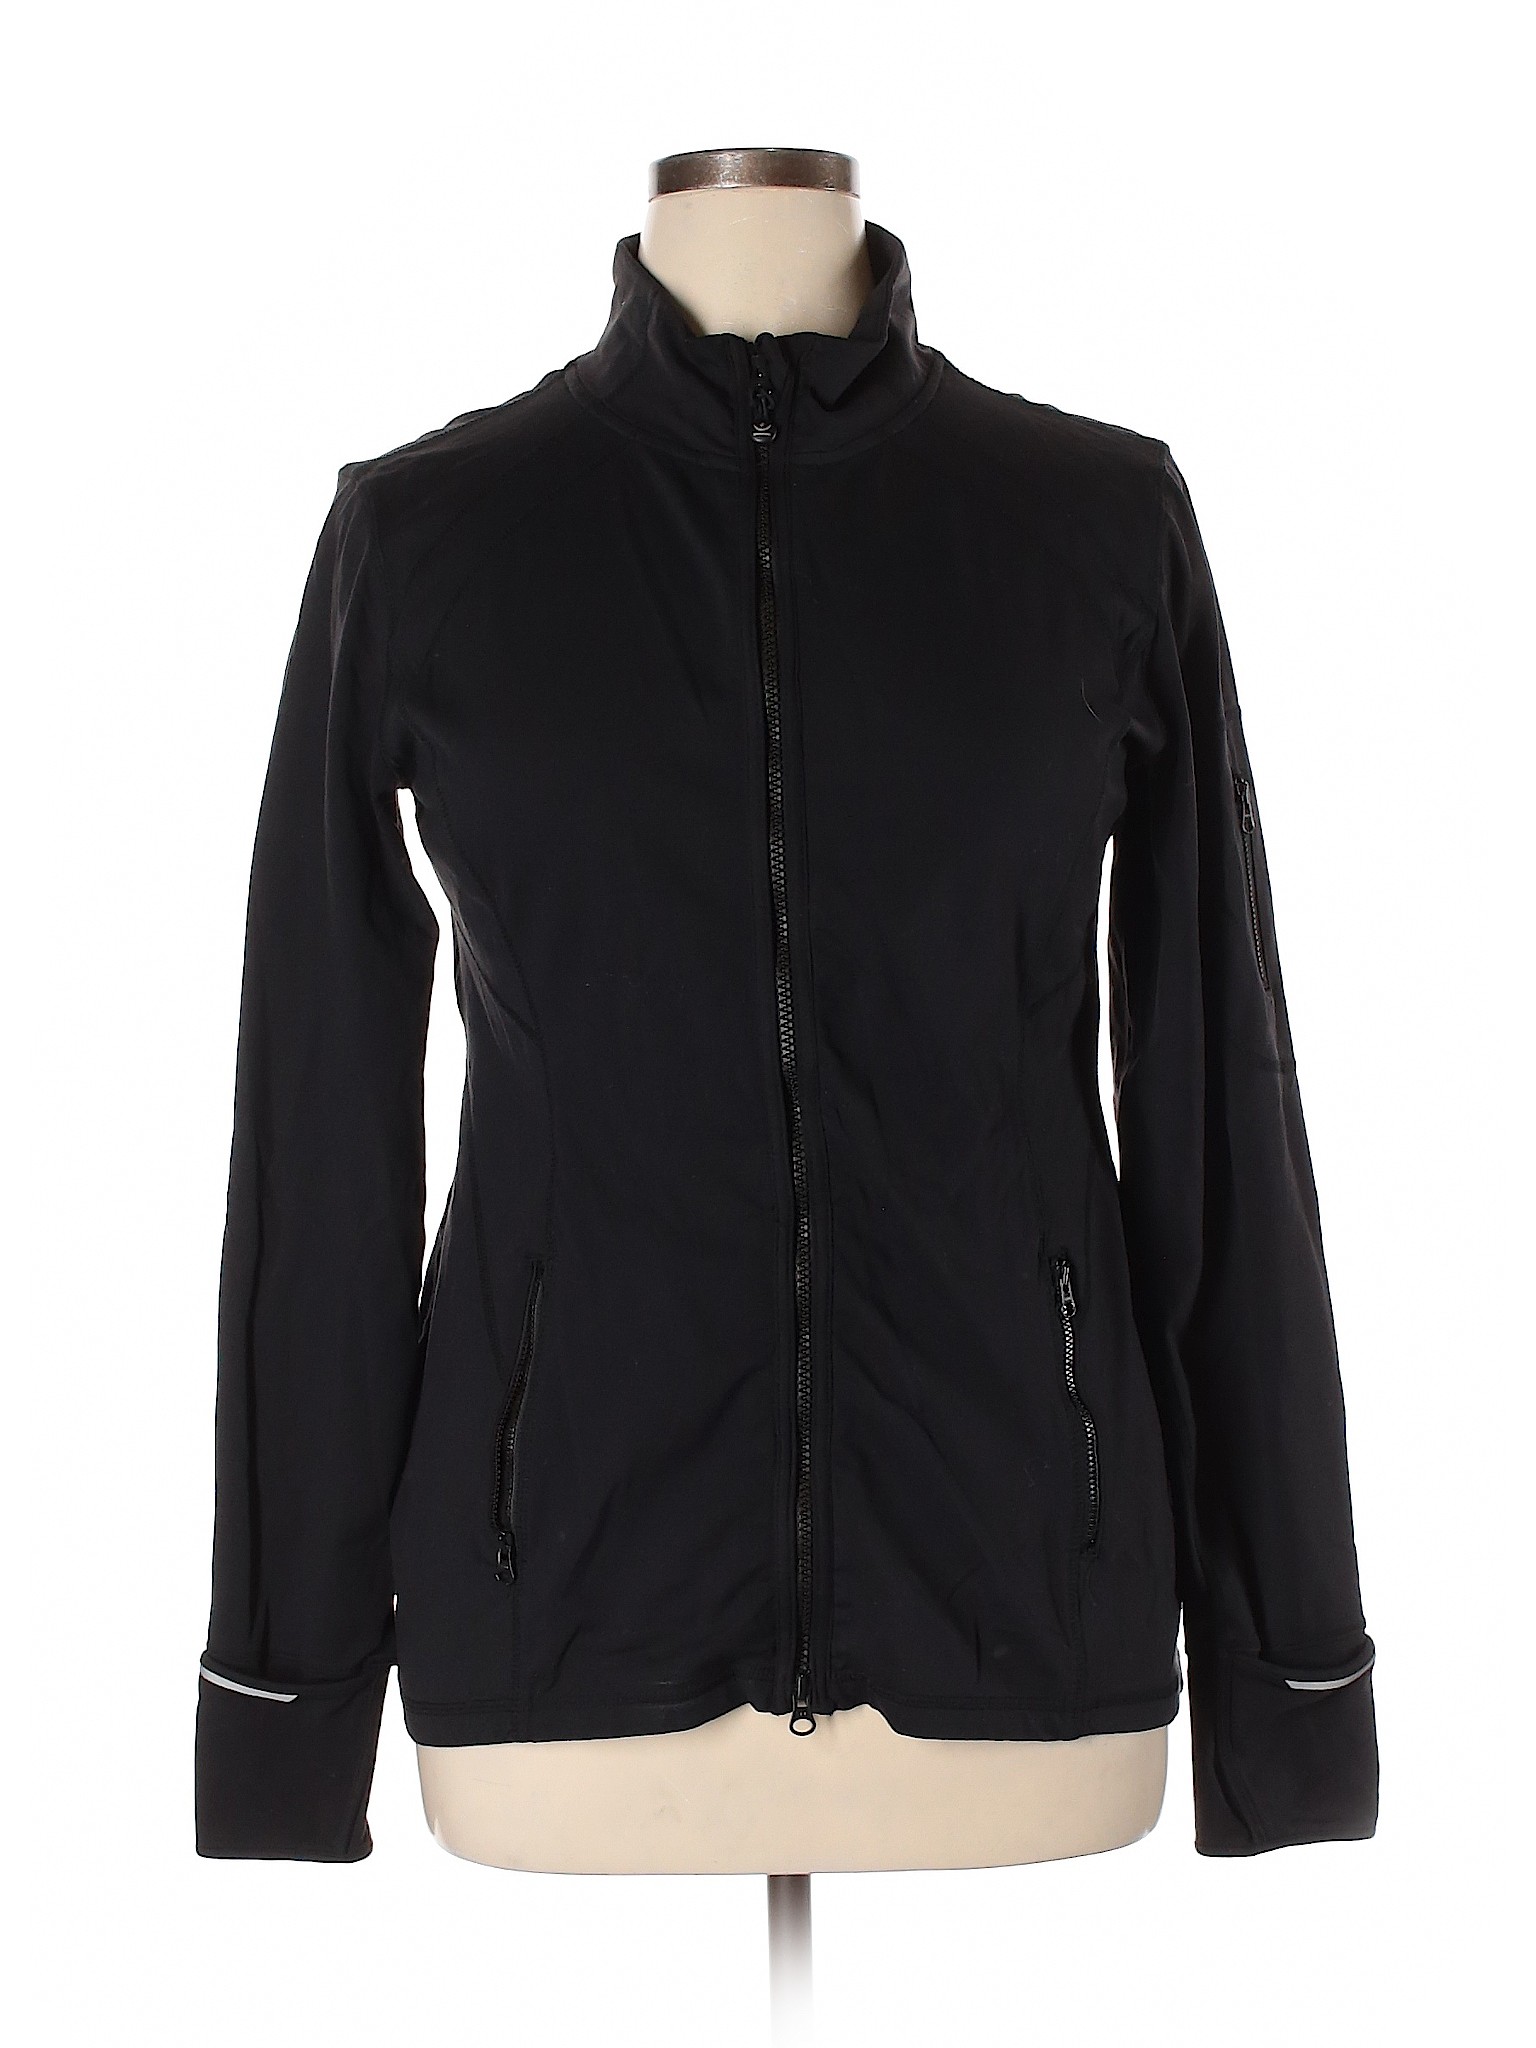 KIRKLAND Signature Black Track Jacket Size XL - 20% off | thredUP